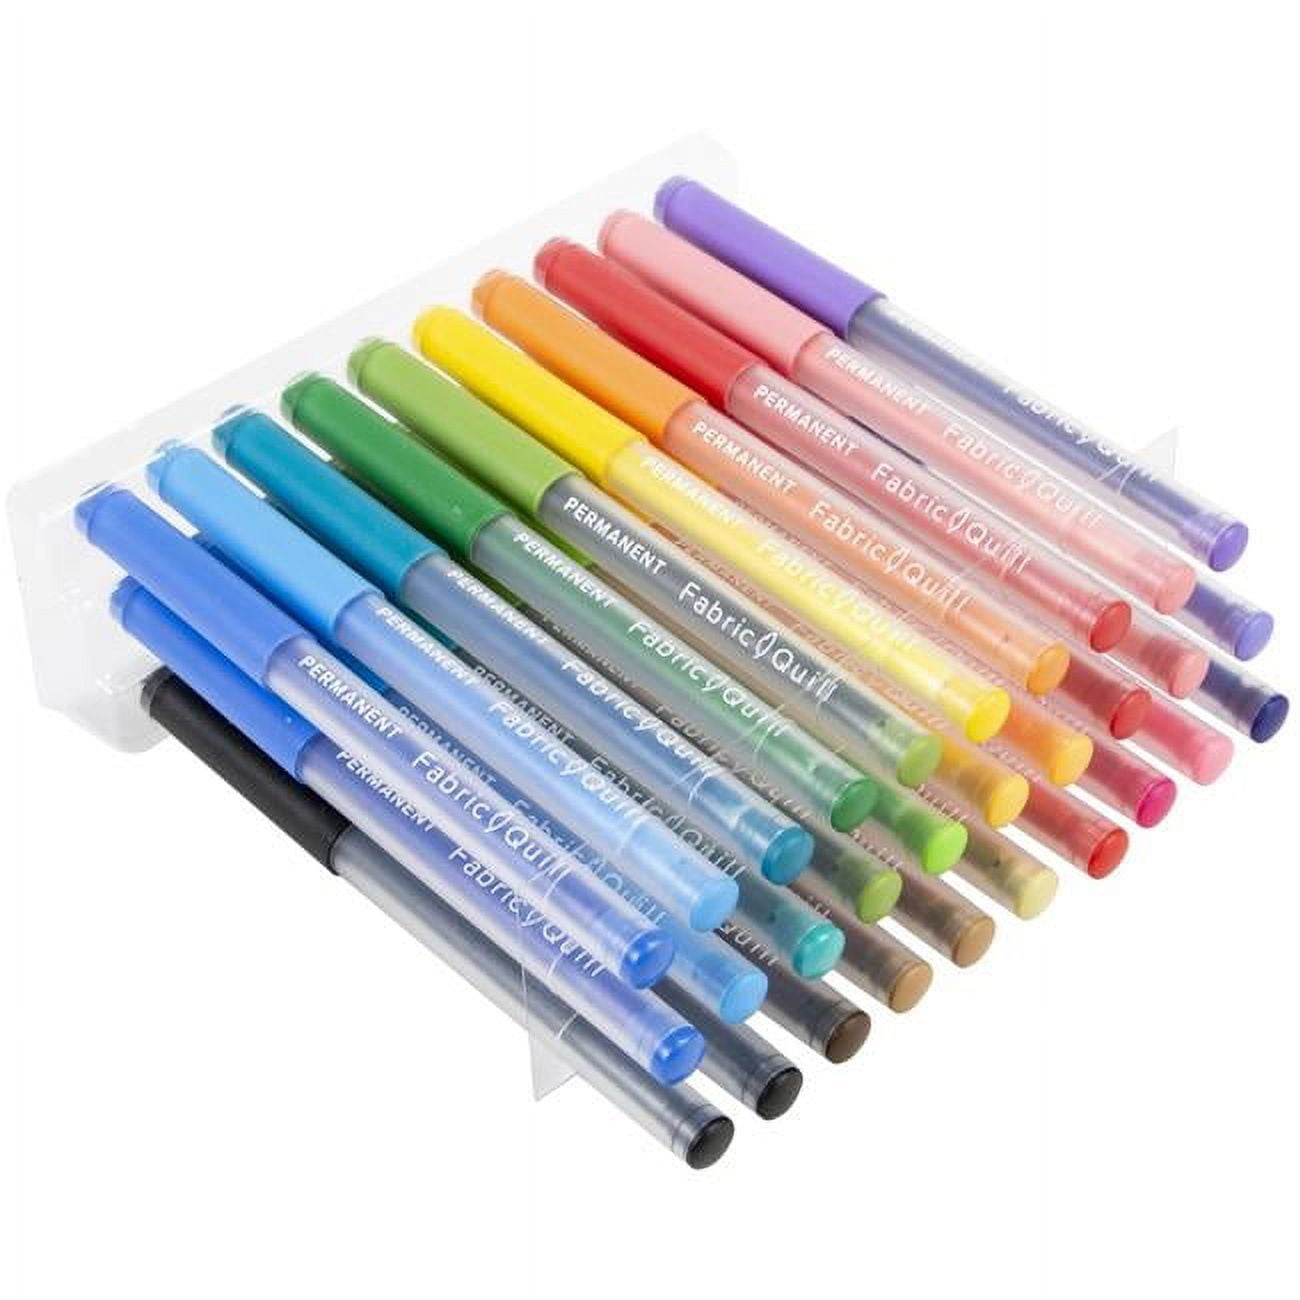 Cricut Opaque Gel Pens 1.0 mm, Pink, White, Orange, Yellow, Blue